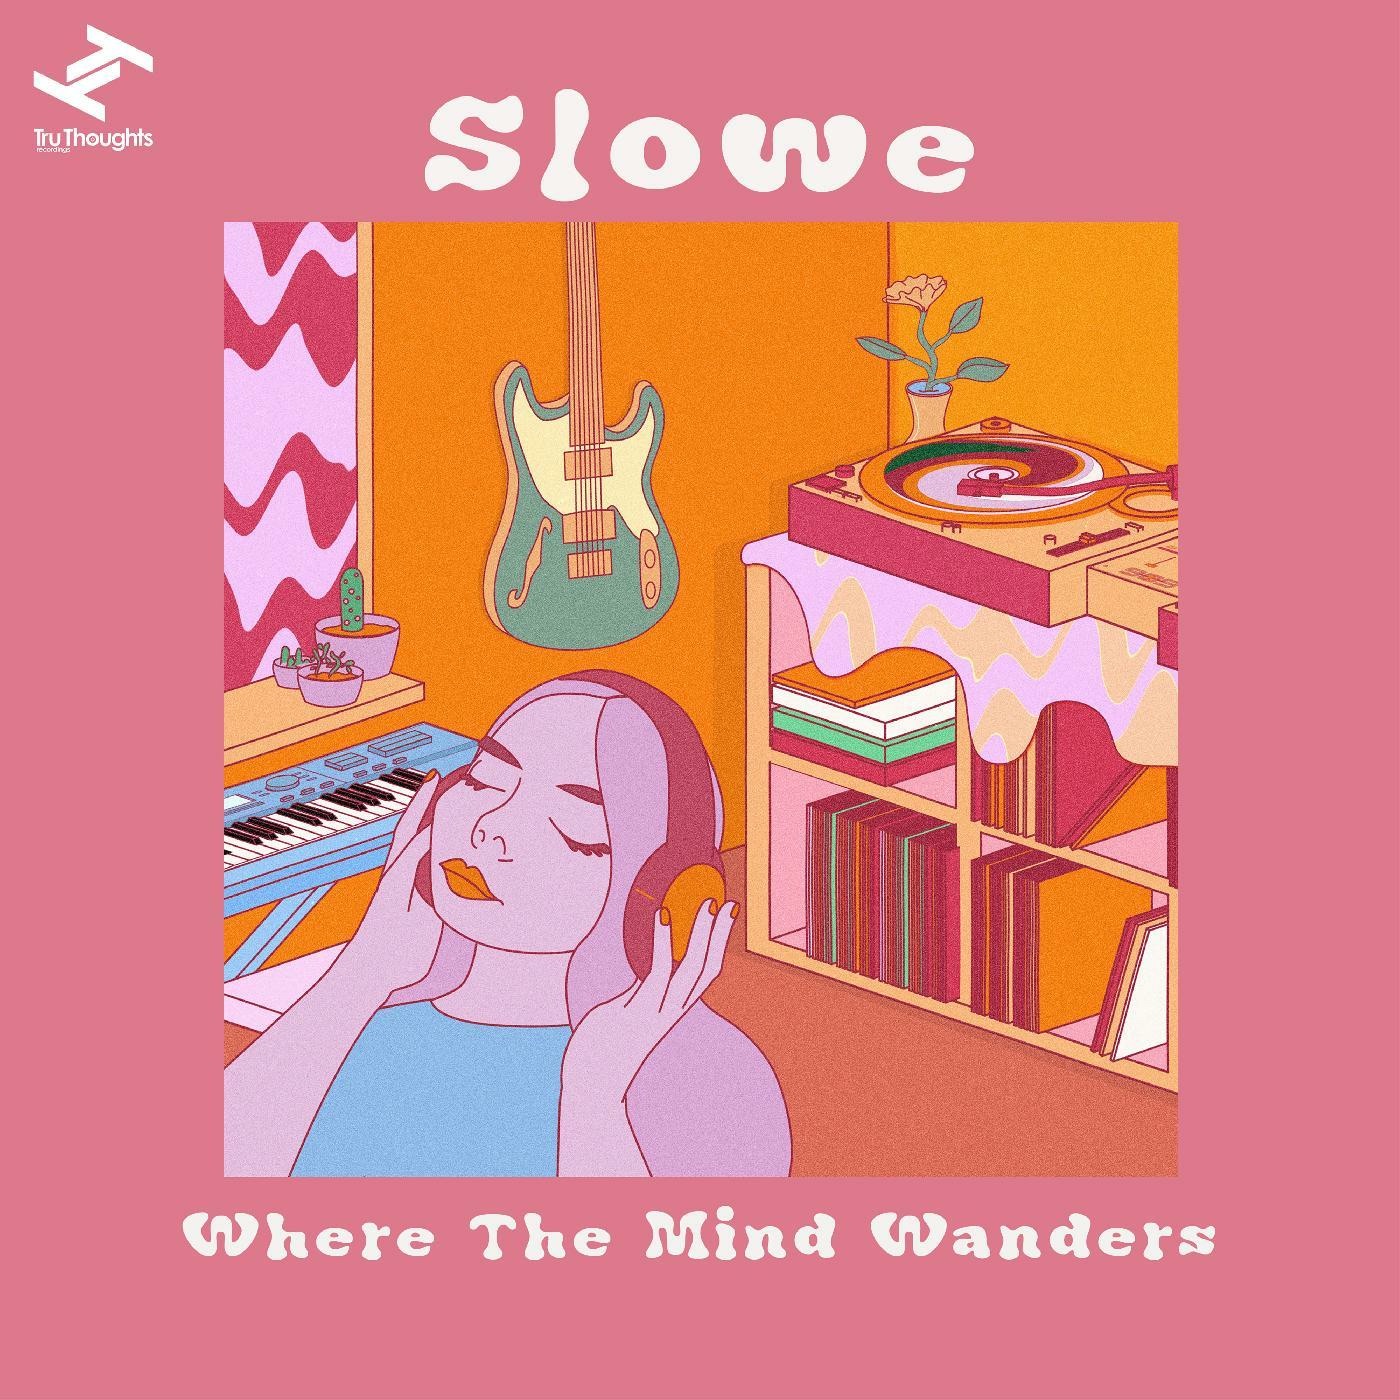 Where The Mind Wanders by Slowe